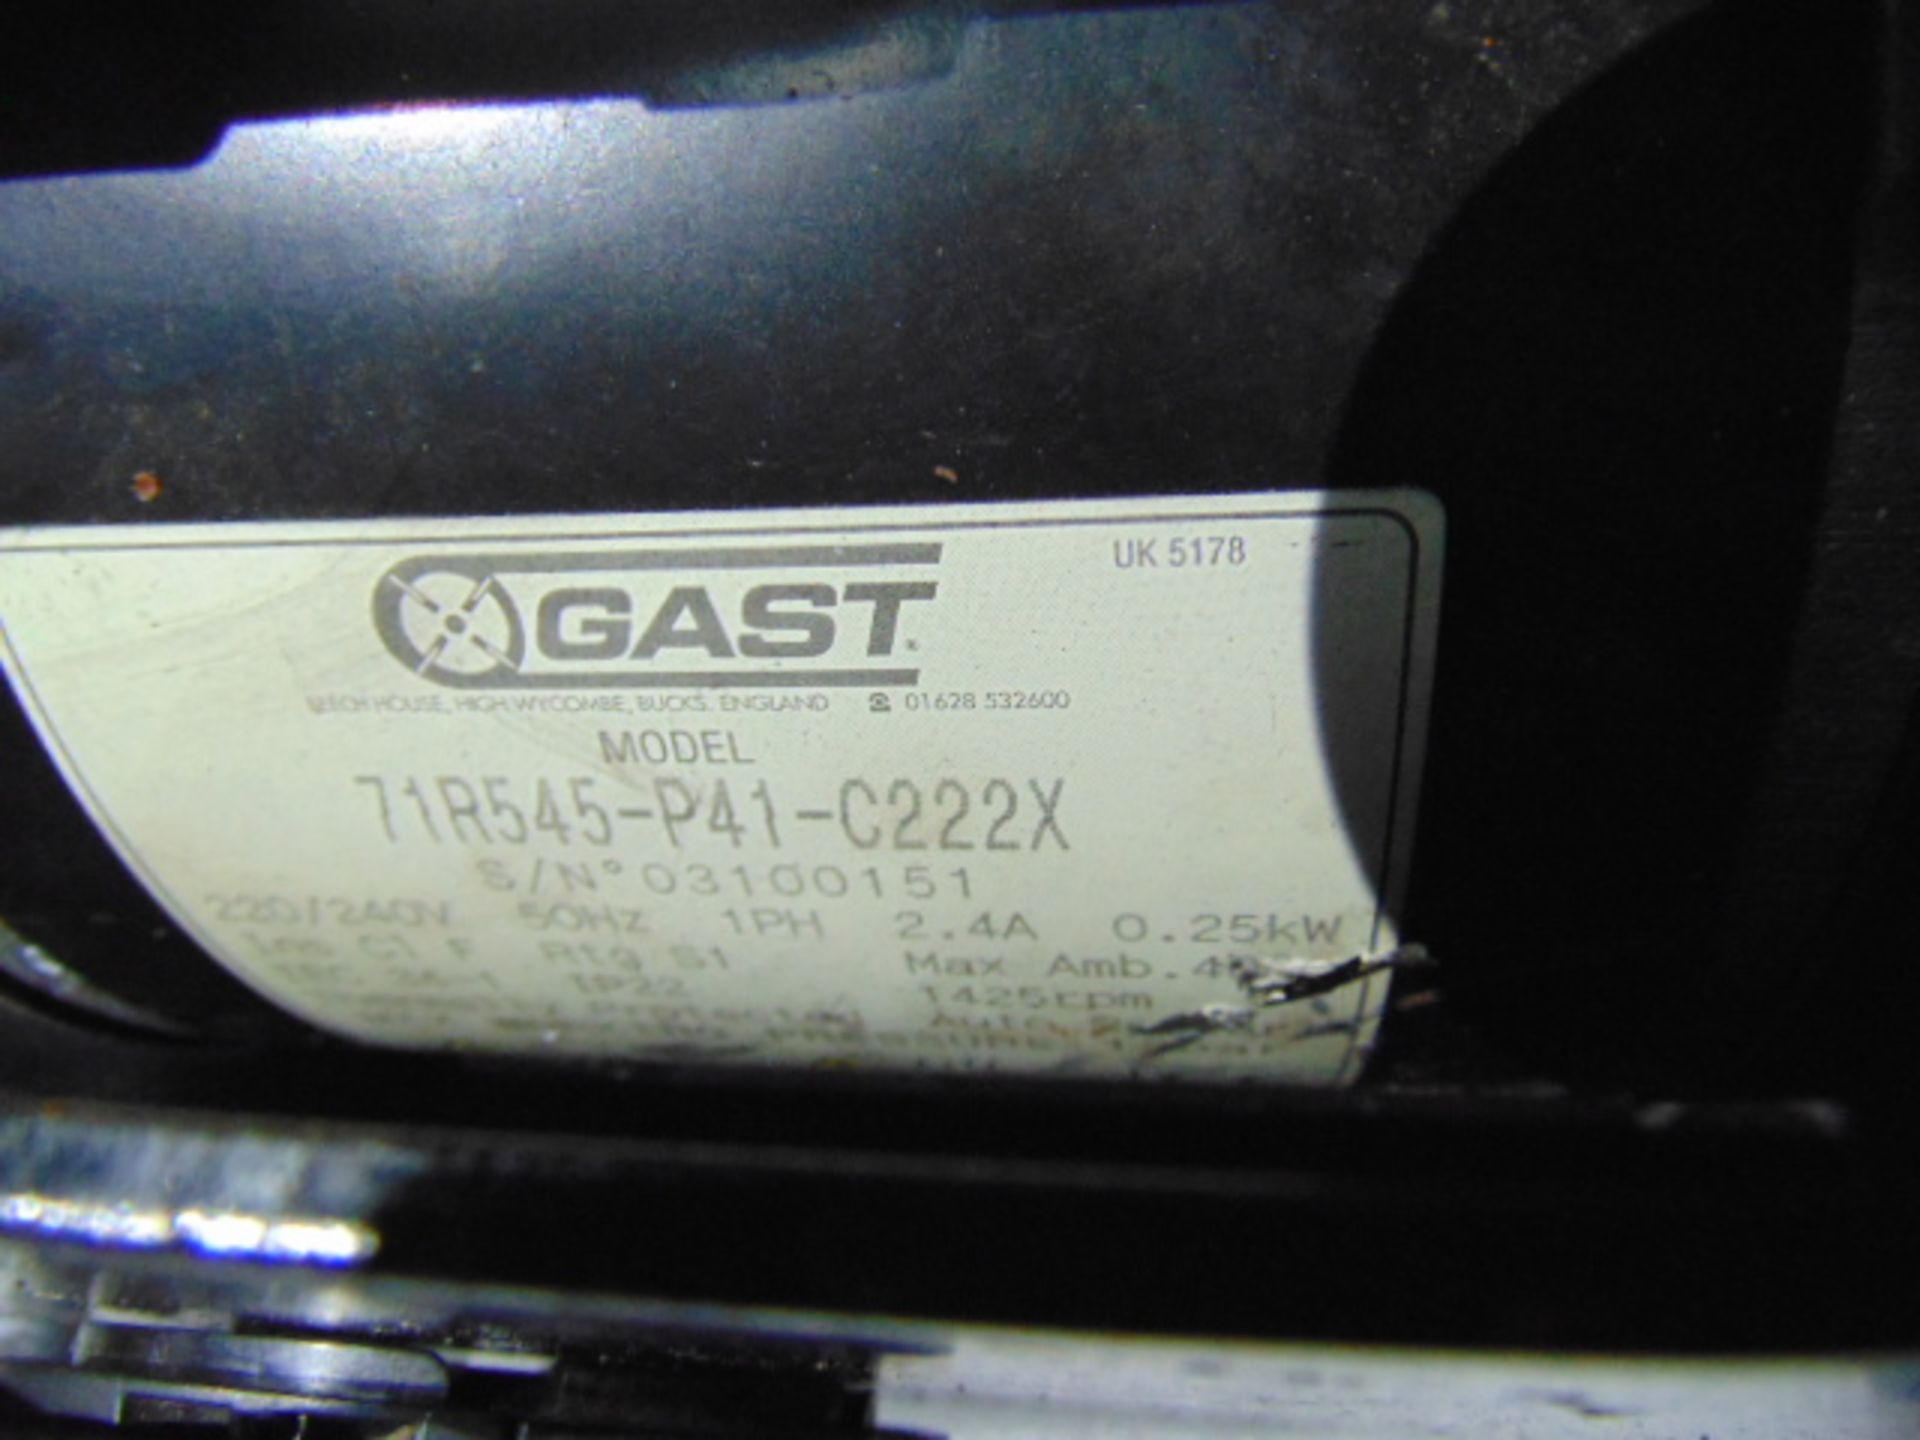 Gast 71R545-P41-C222X High Pressure Compressor - Image 5 of 5